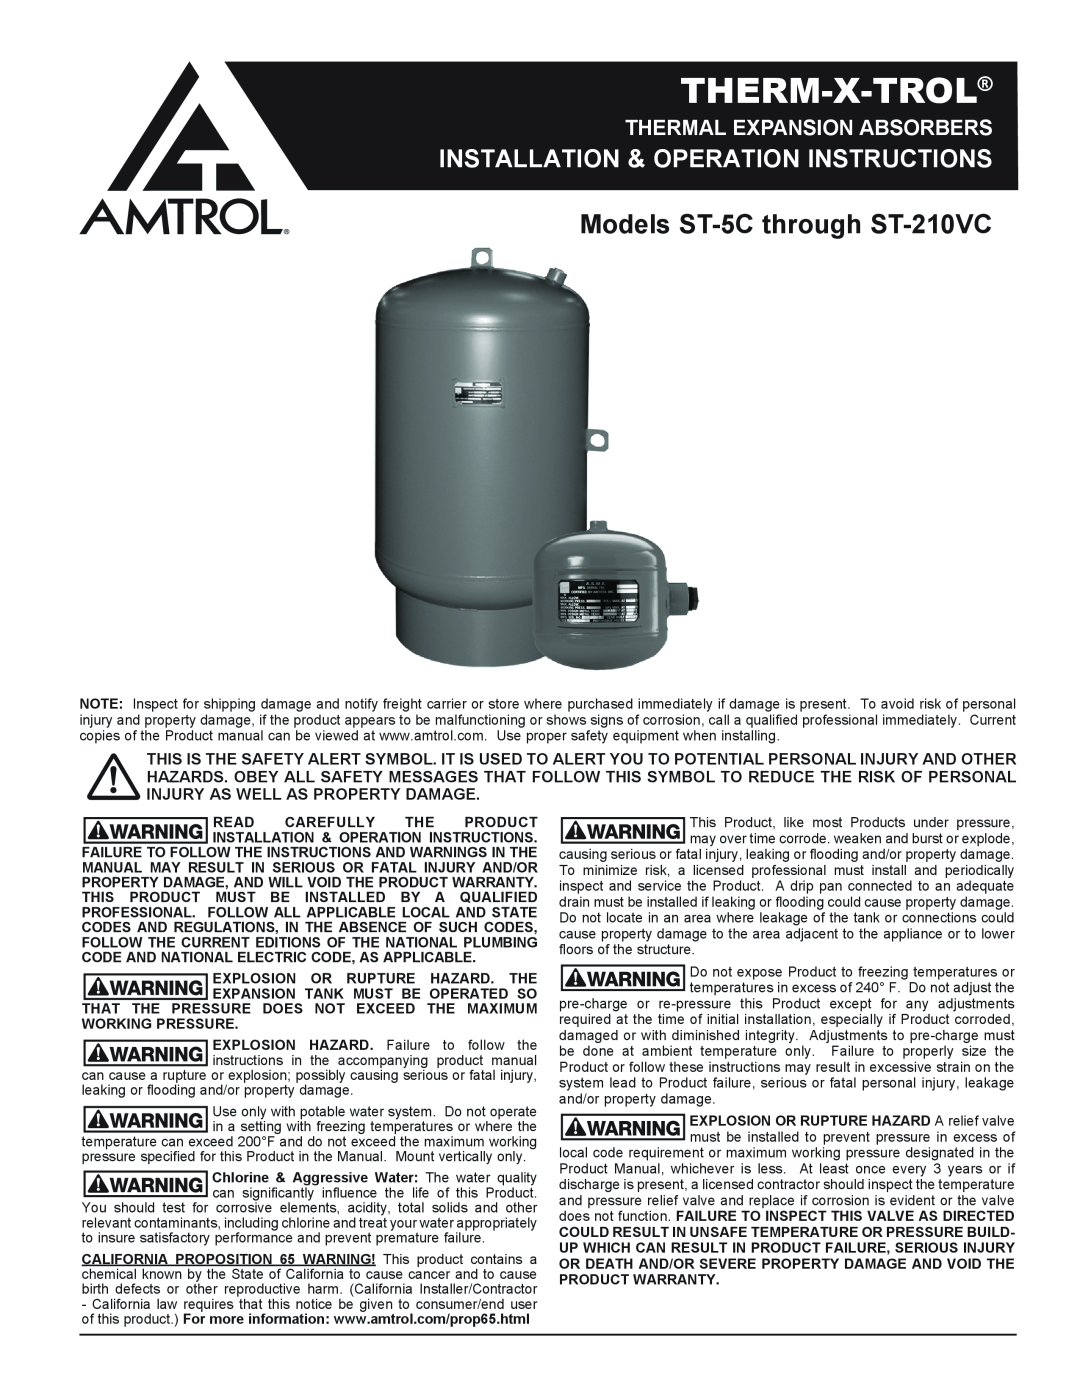 Amtrol ST-5C THROUGH ST-201VC warranty Therm-X-Trol, Models ST-5Cthrough ST-210VC, Installation & Operation Instructions 